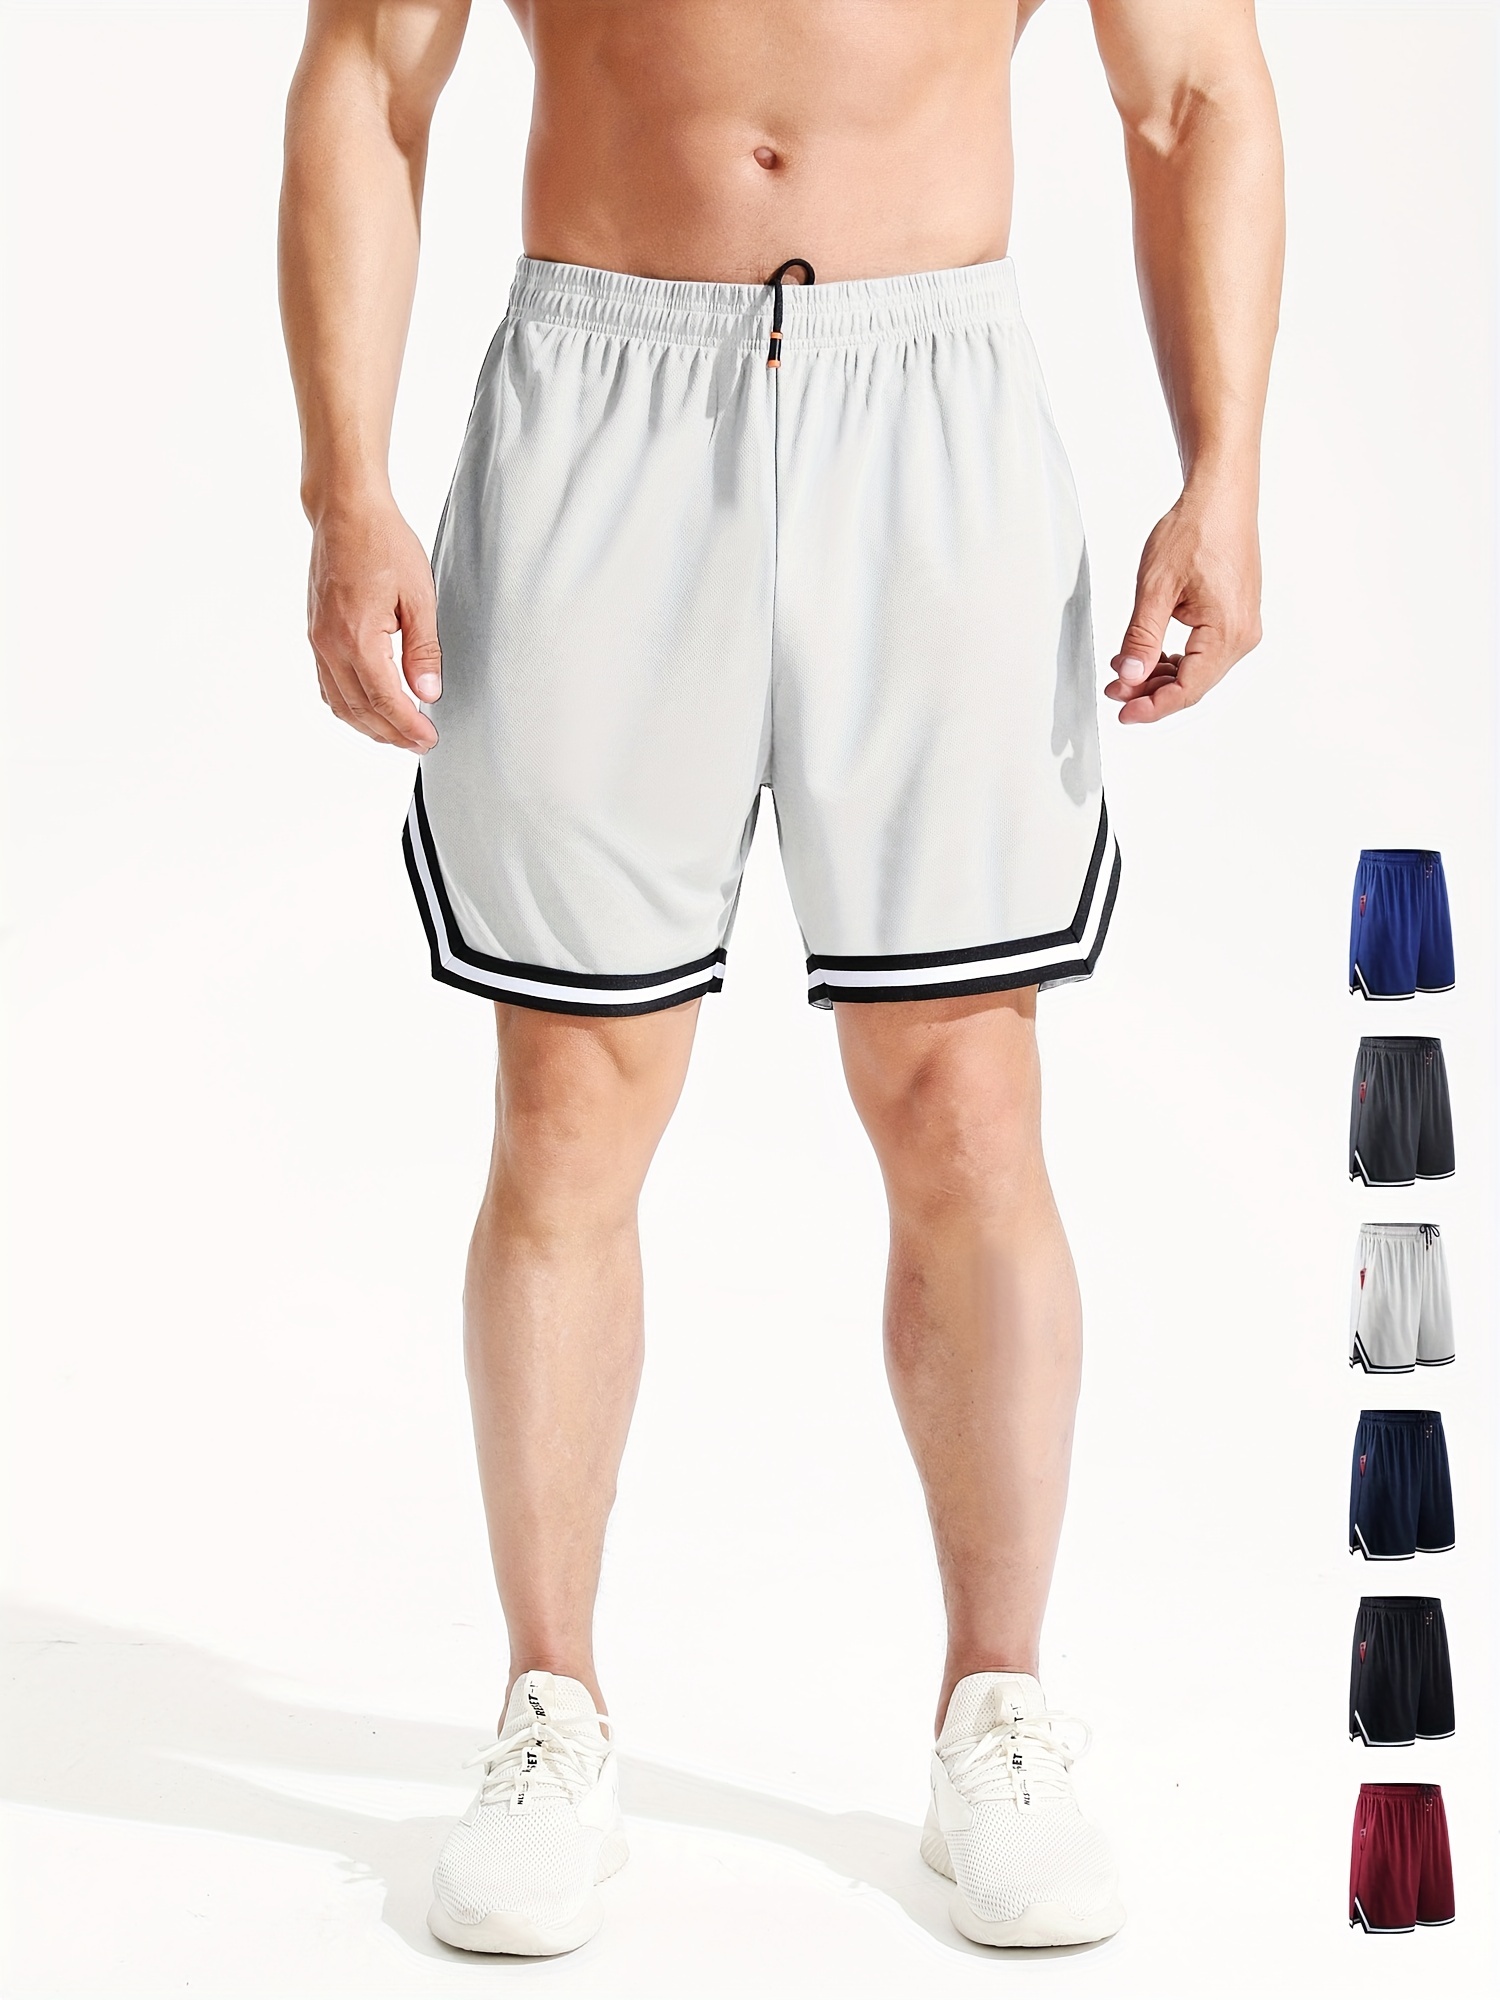 Men's Sports Shorts: Perfect for Running, Marathon Fitness, Fitness  Training & Beach/Basketball Thin Legs!